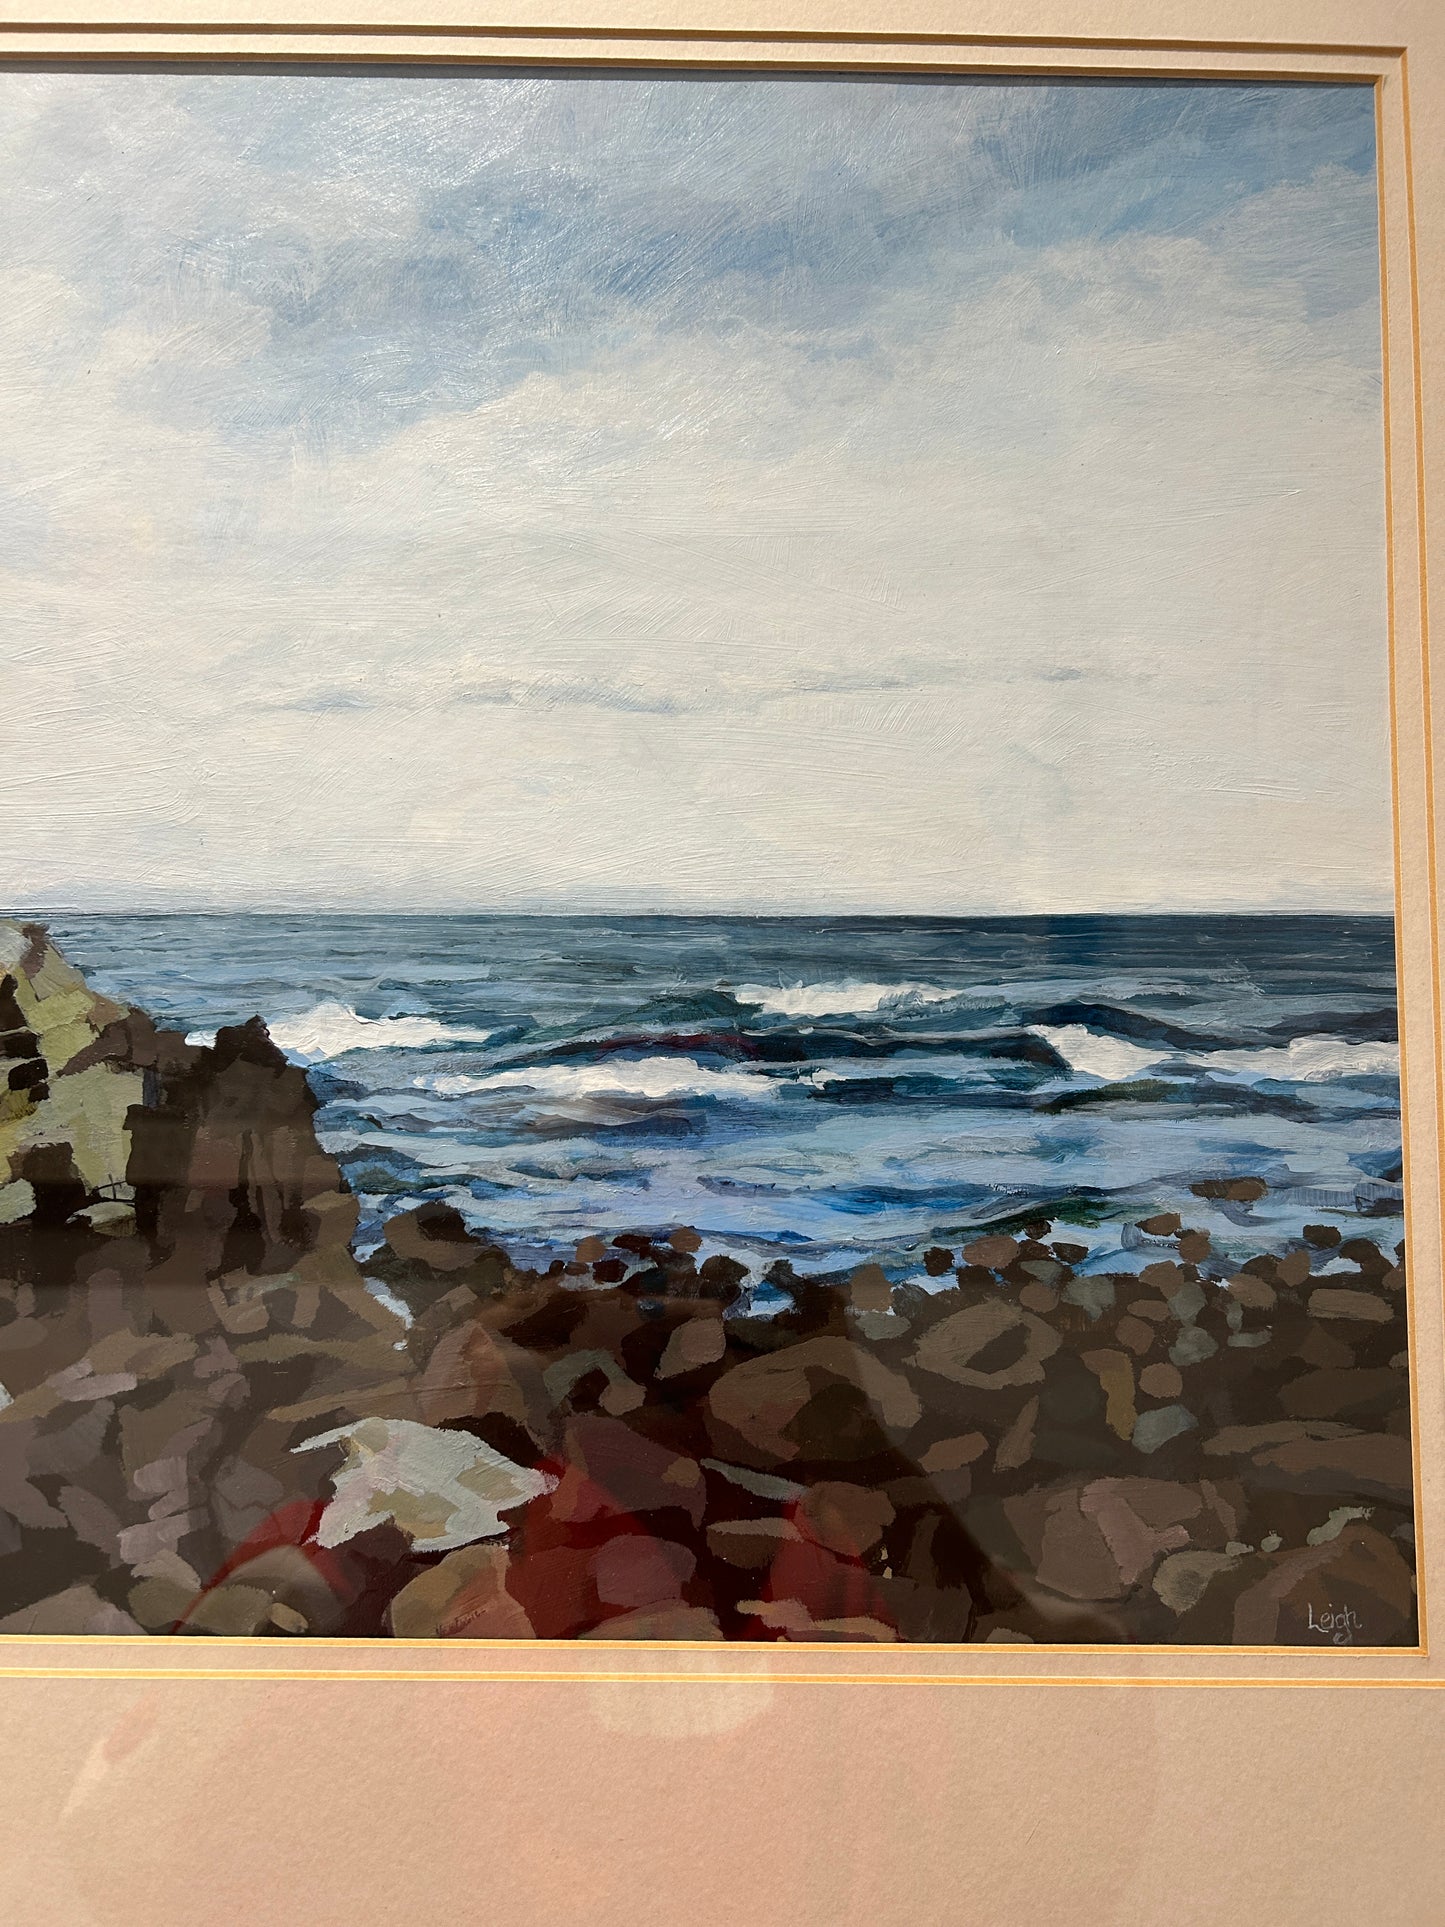 Paesaggio marino scozzese di Leigh D. Walker.